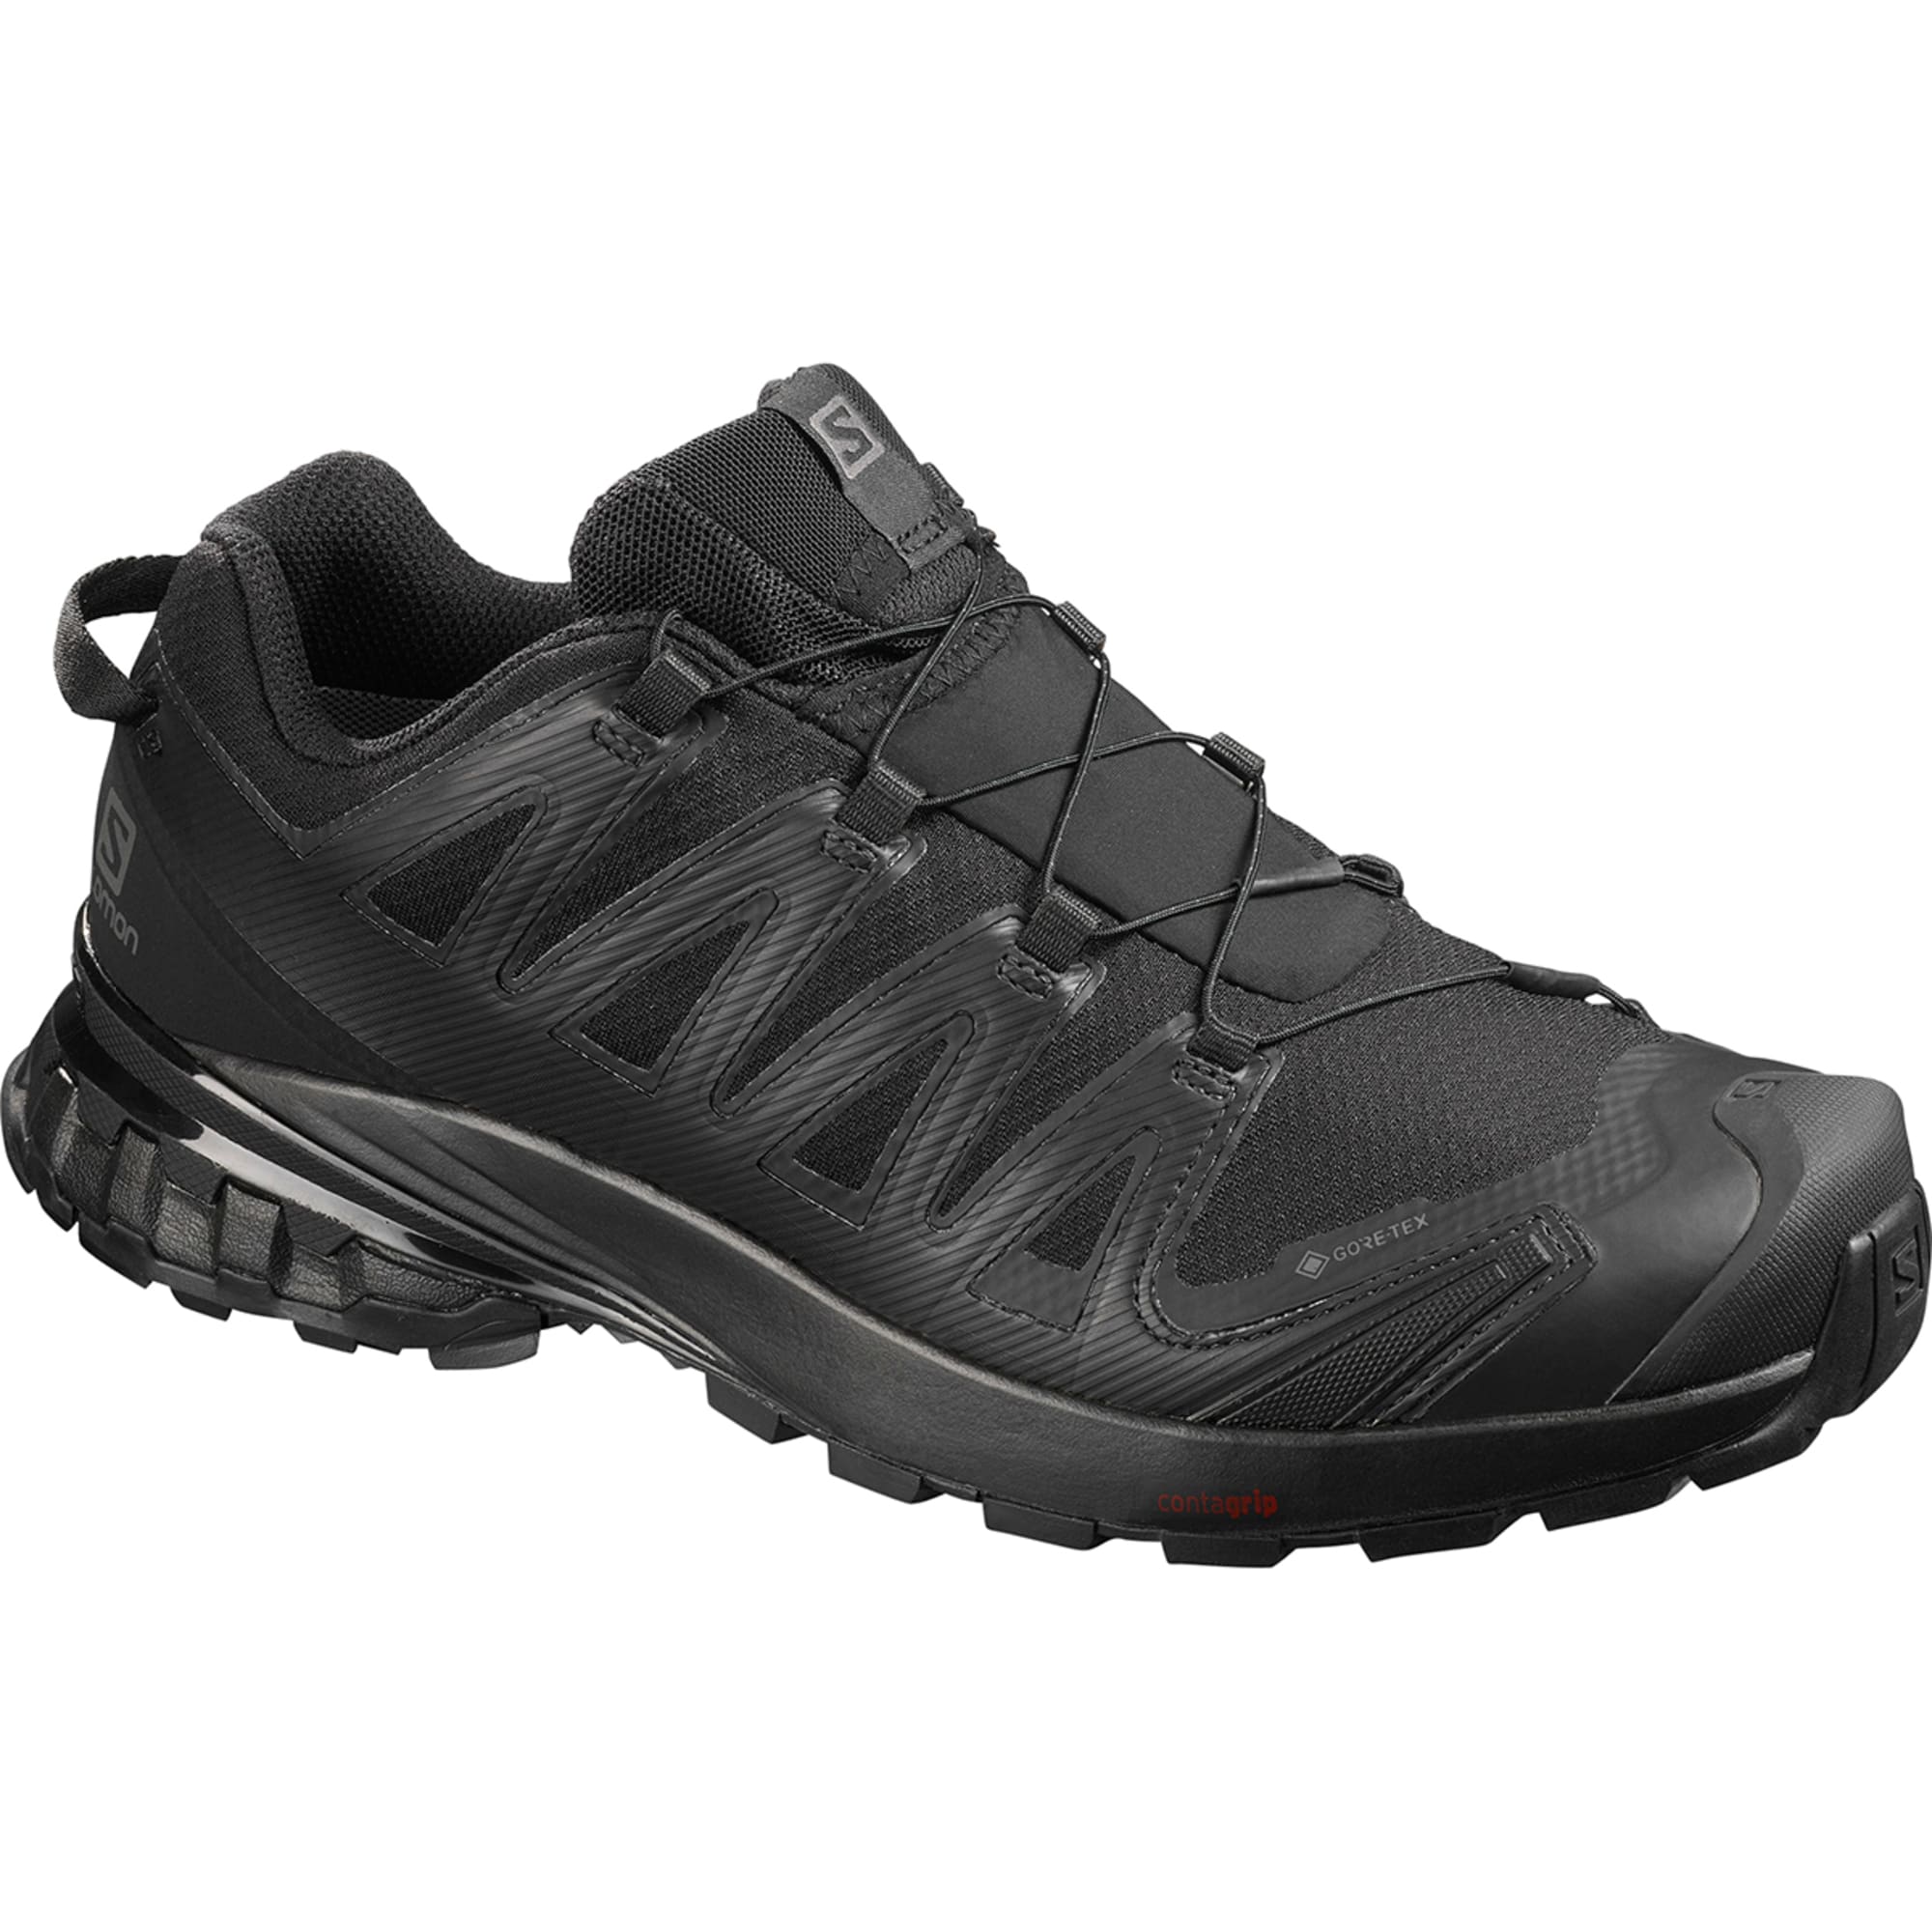 XA Pro 3D GTX Trail Running Shoe - Eastern Mountain Sports